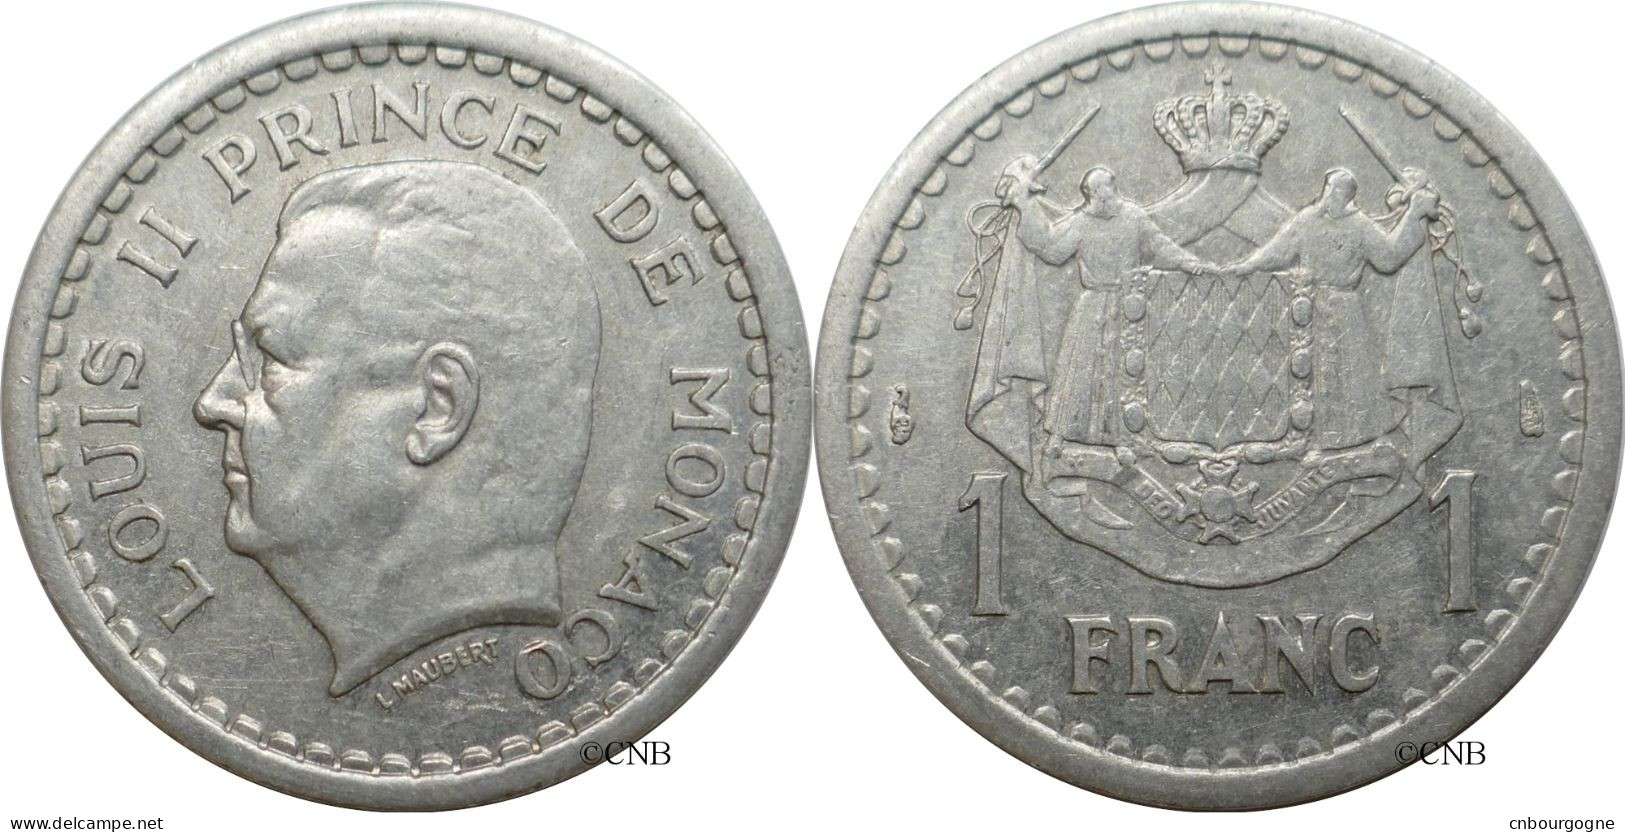 Monaco - Principauté - Louis II - 1 Franc ND (1943) - TTB/XF45 - Mon6519 - 1922-1949 Luigi II